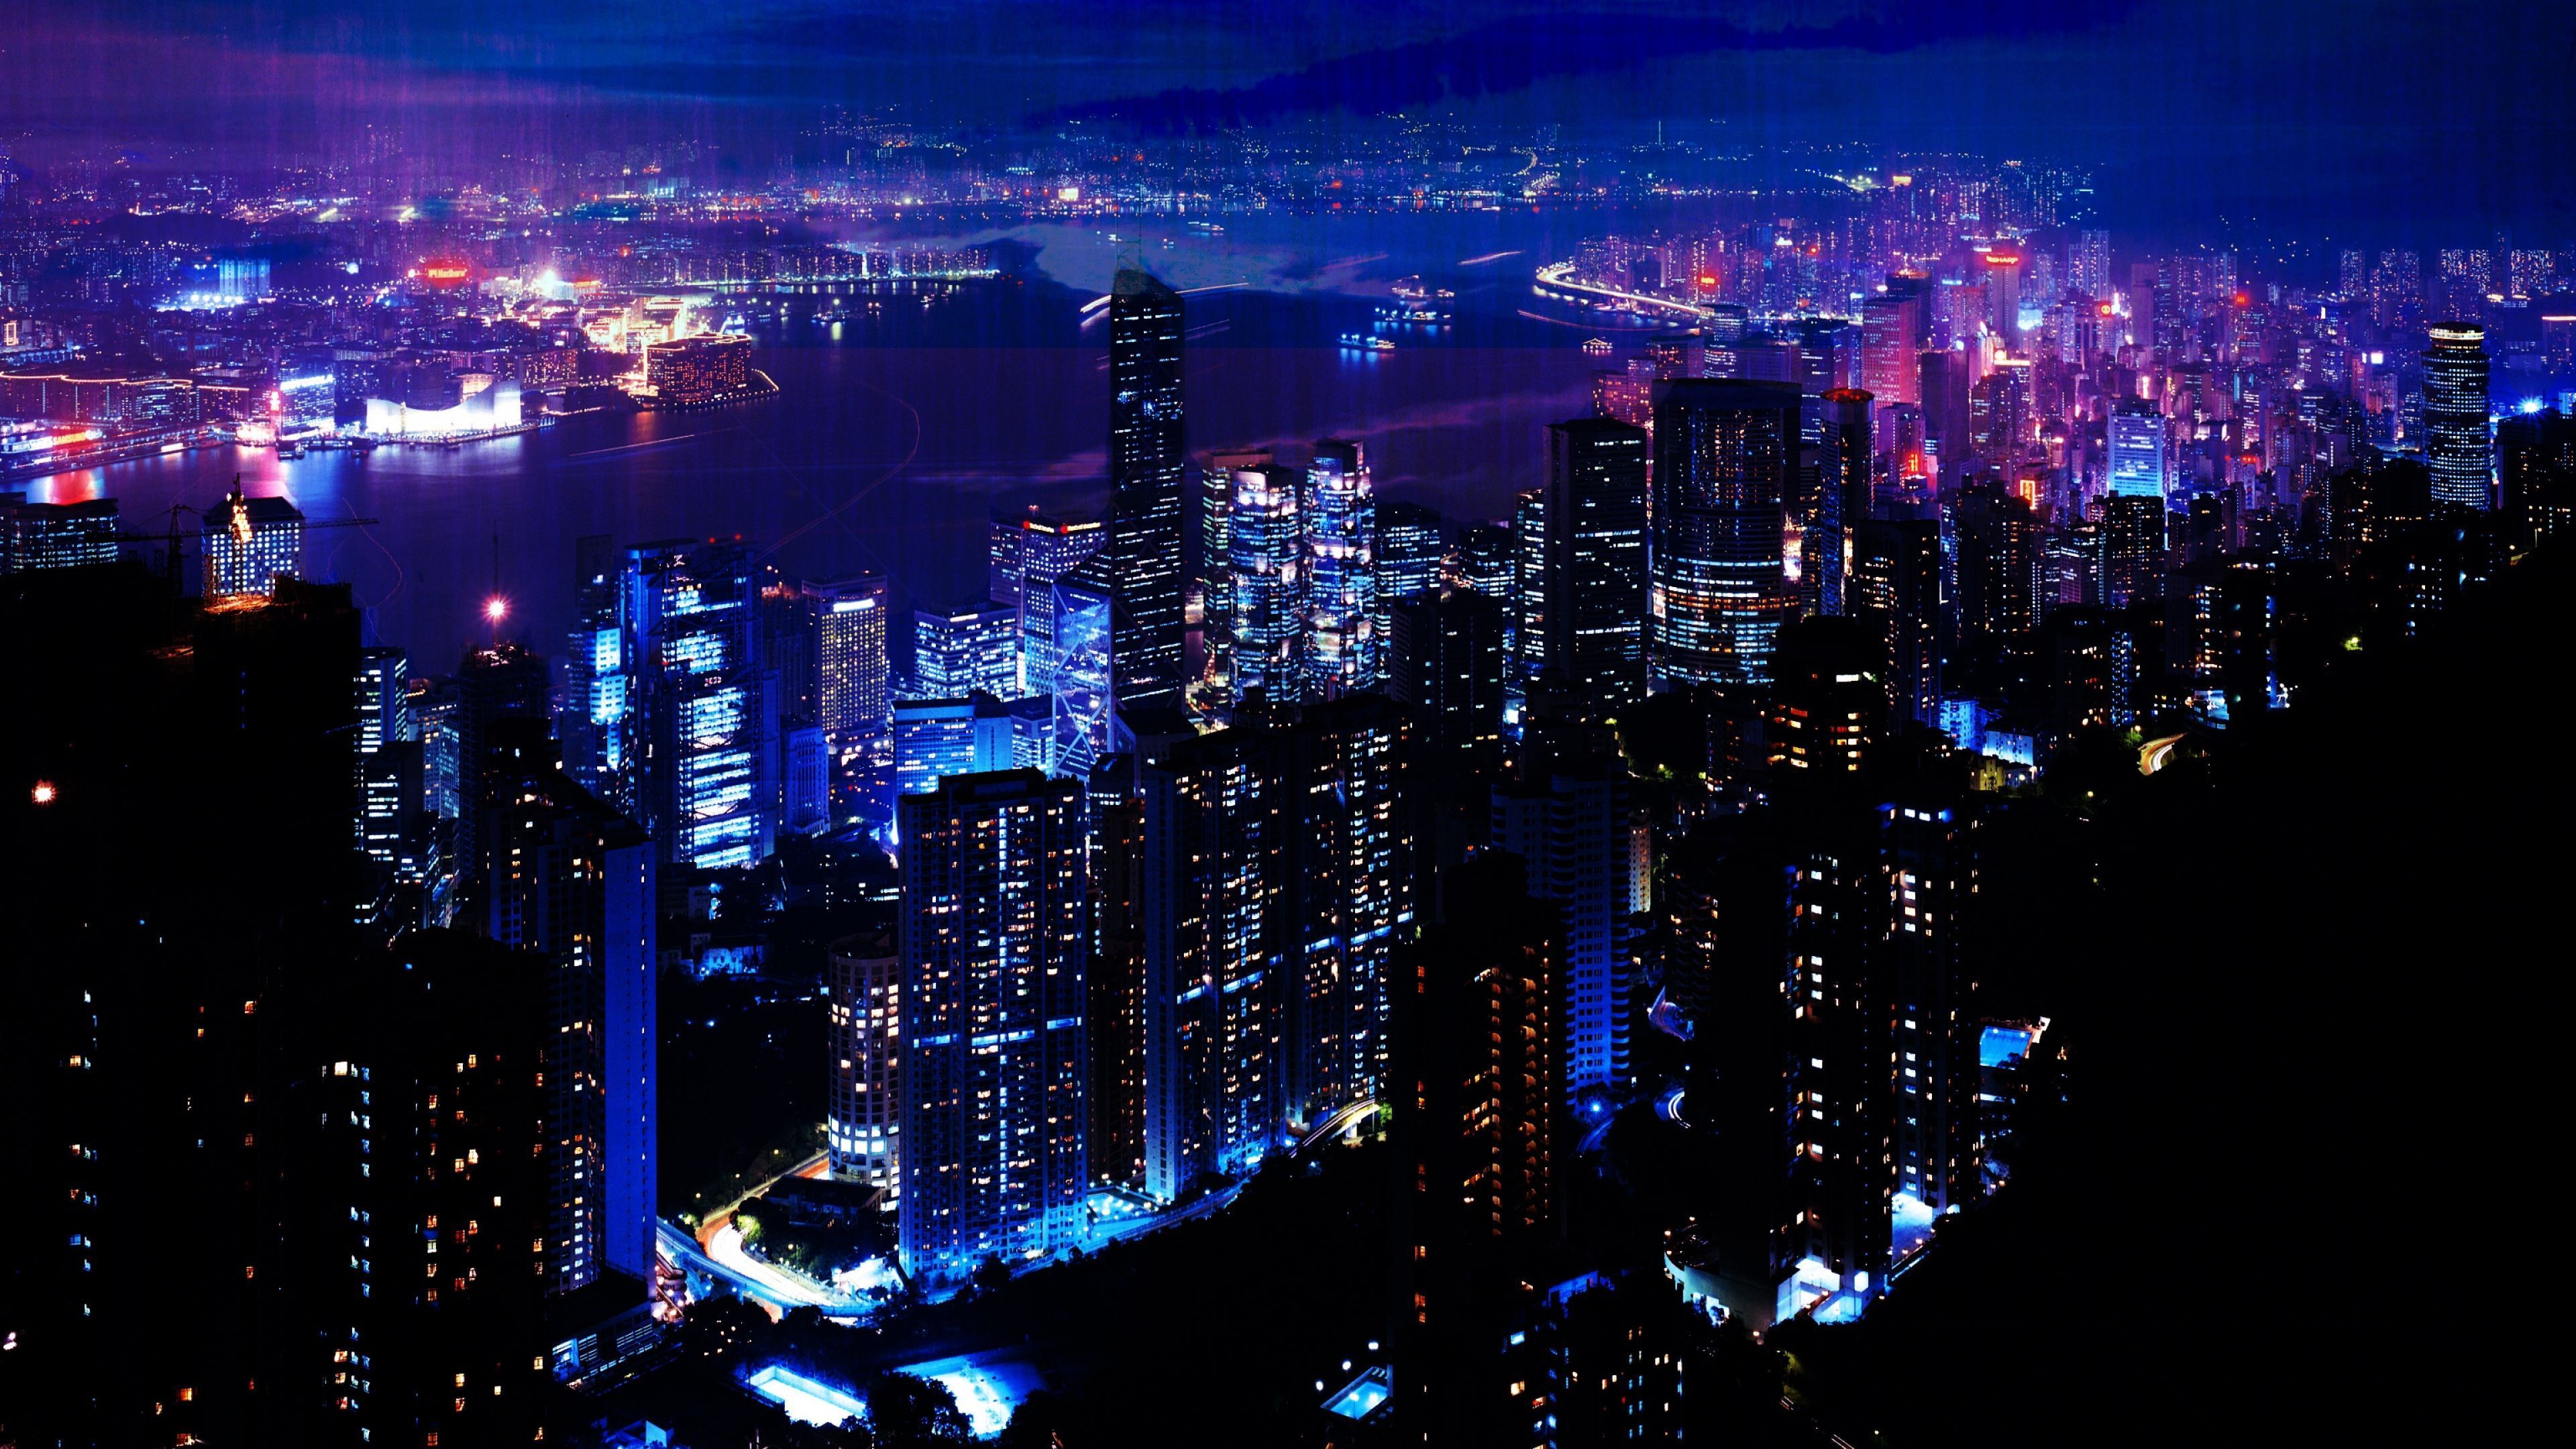 Night Aesthetic Desktop Wallpaper. City lights wallpaper, City wallpaper, Aesthetic desktop wallpaper